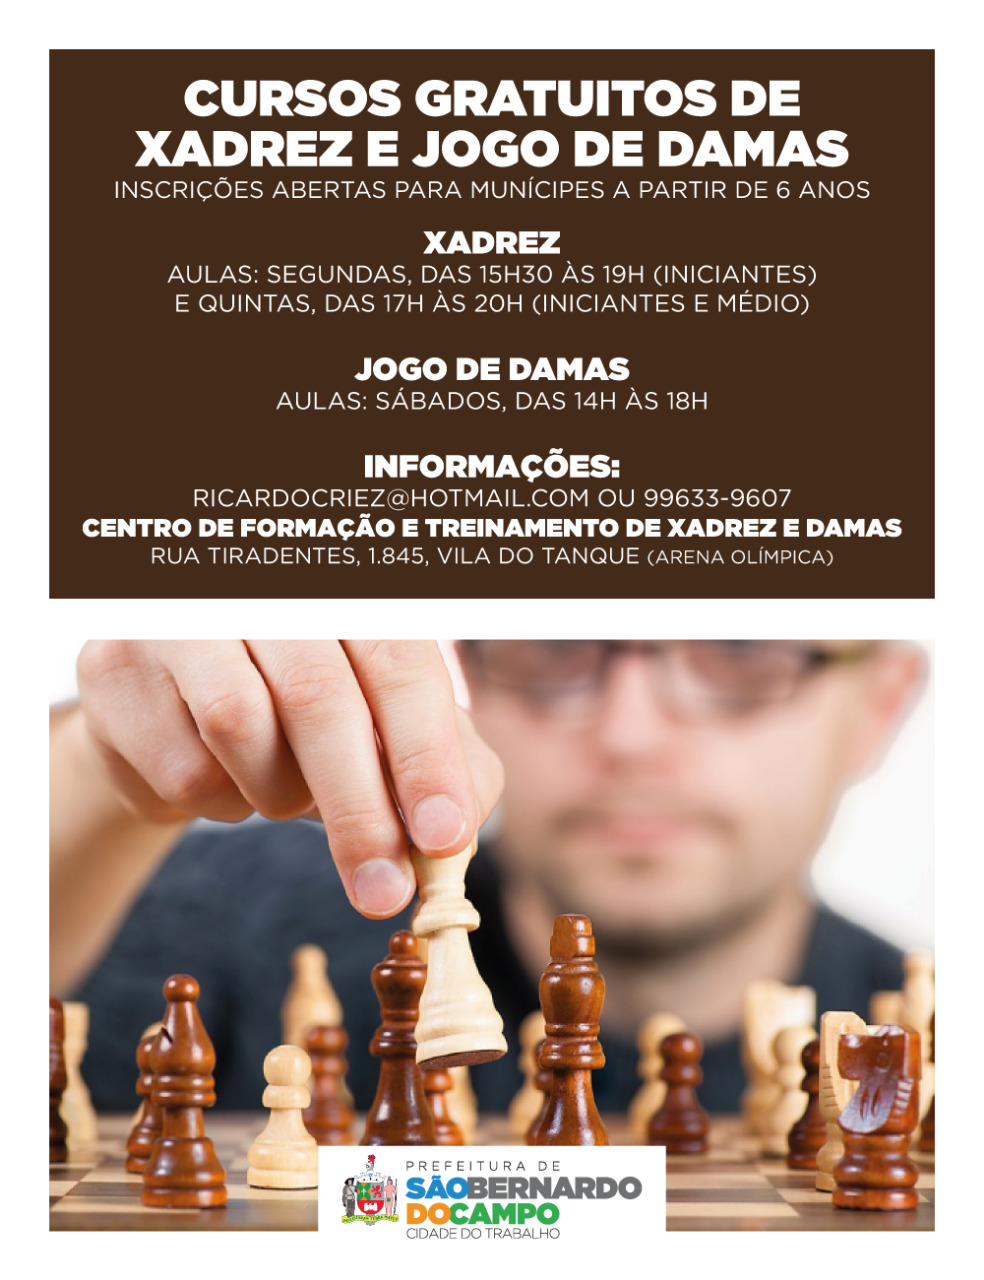 Curso gratuito de Xadrez - Avançado grátis - Curso online de